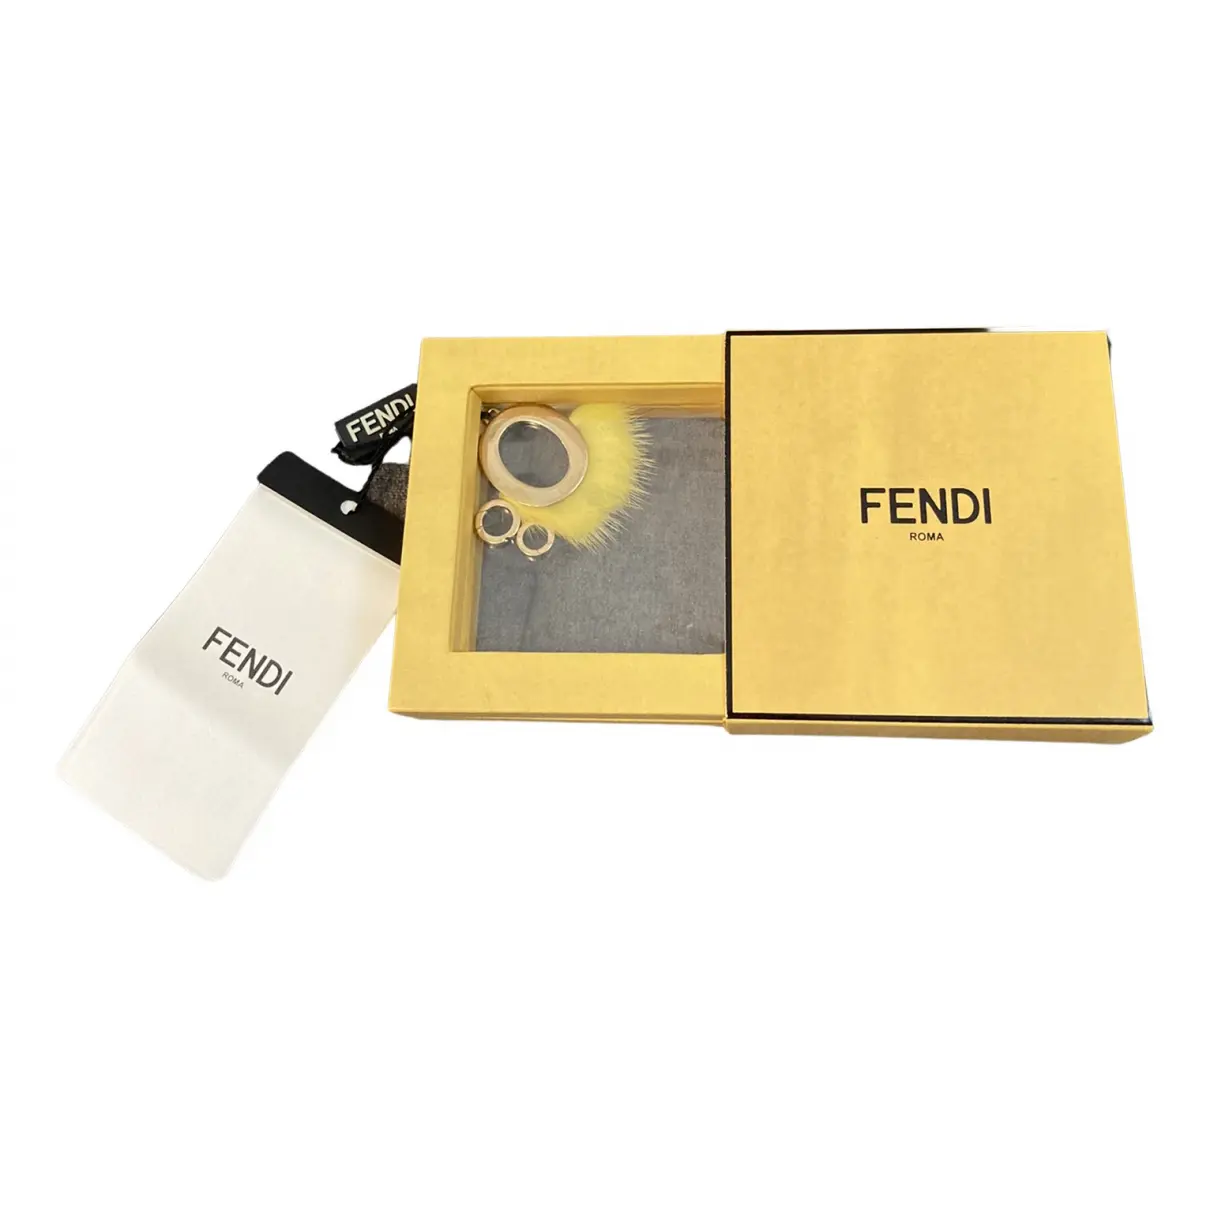 Buy Fendi ABCharm bag charm online